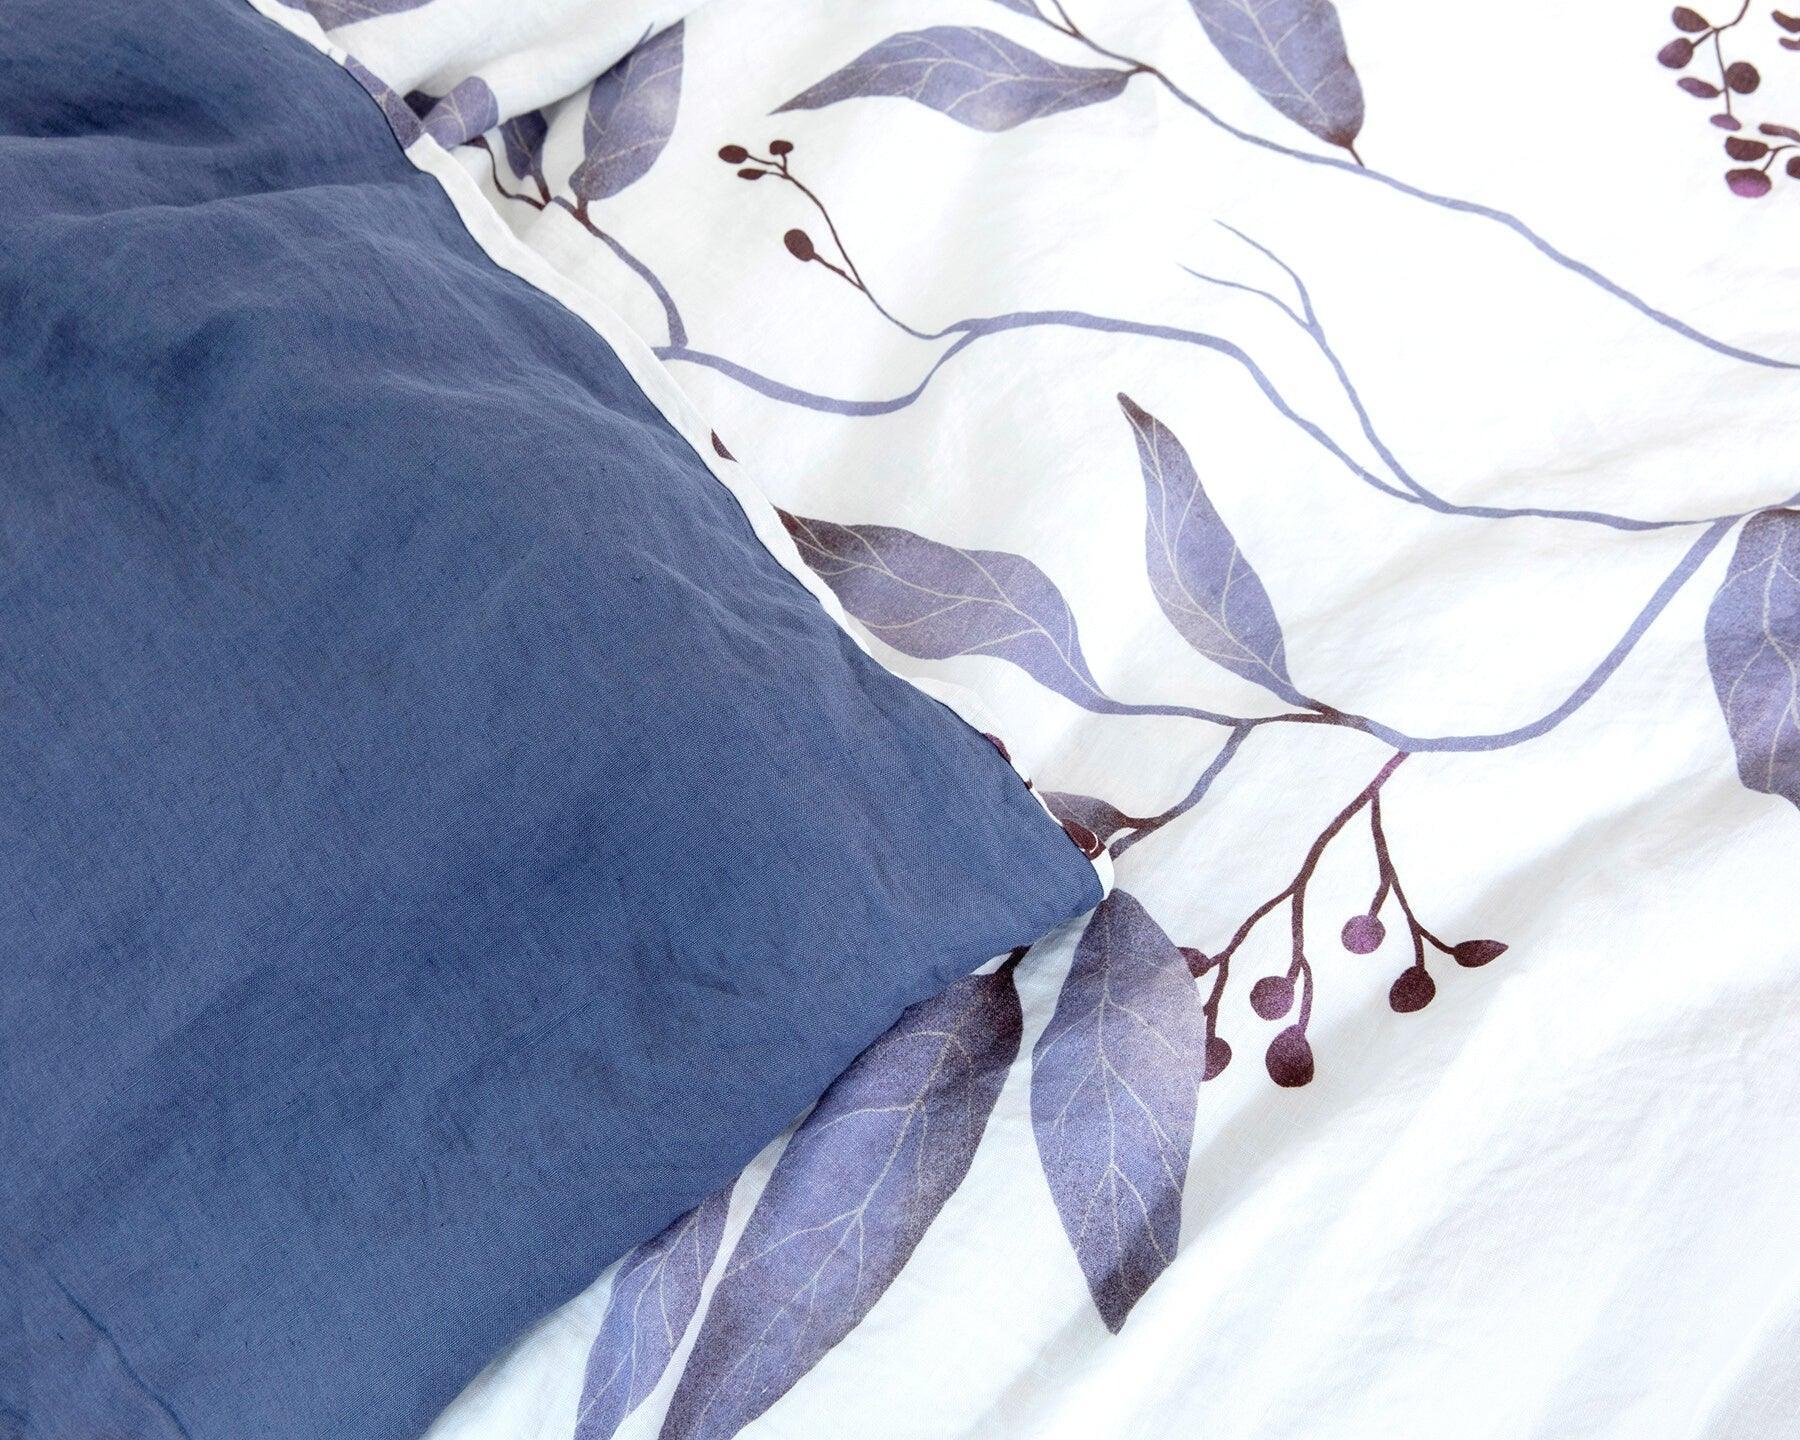 European organic linen duvet cover set in moderns Scandinavian design on white with purple leaves - Twin / Standard, Full/Queen / Standard, King/Cal-King / Standard, King/Cal-King / King